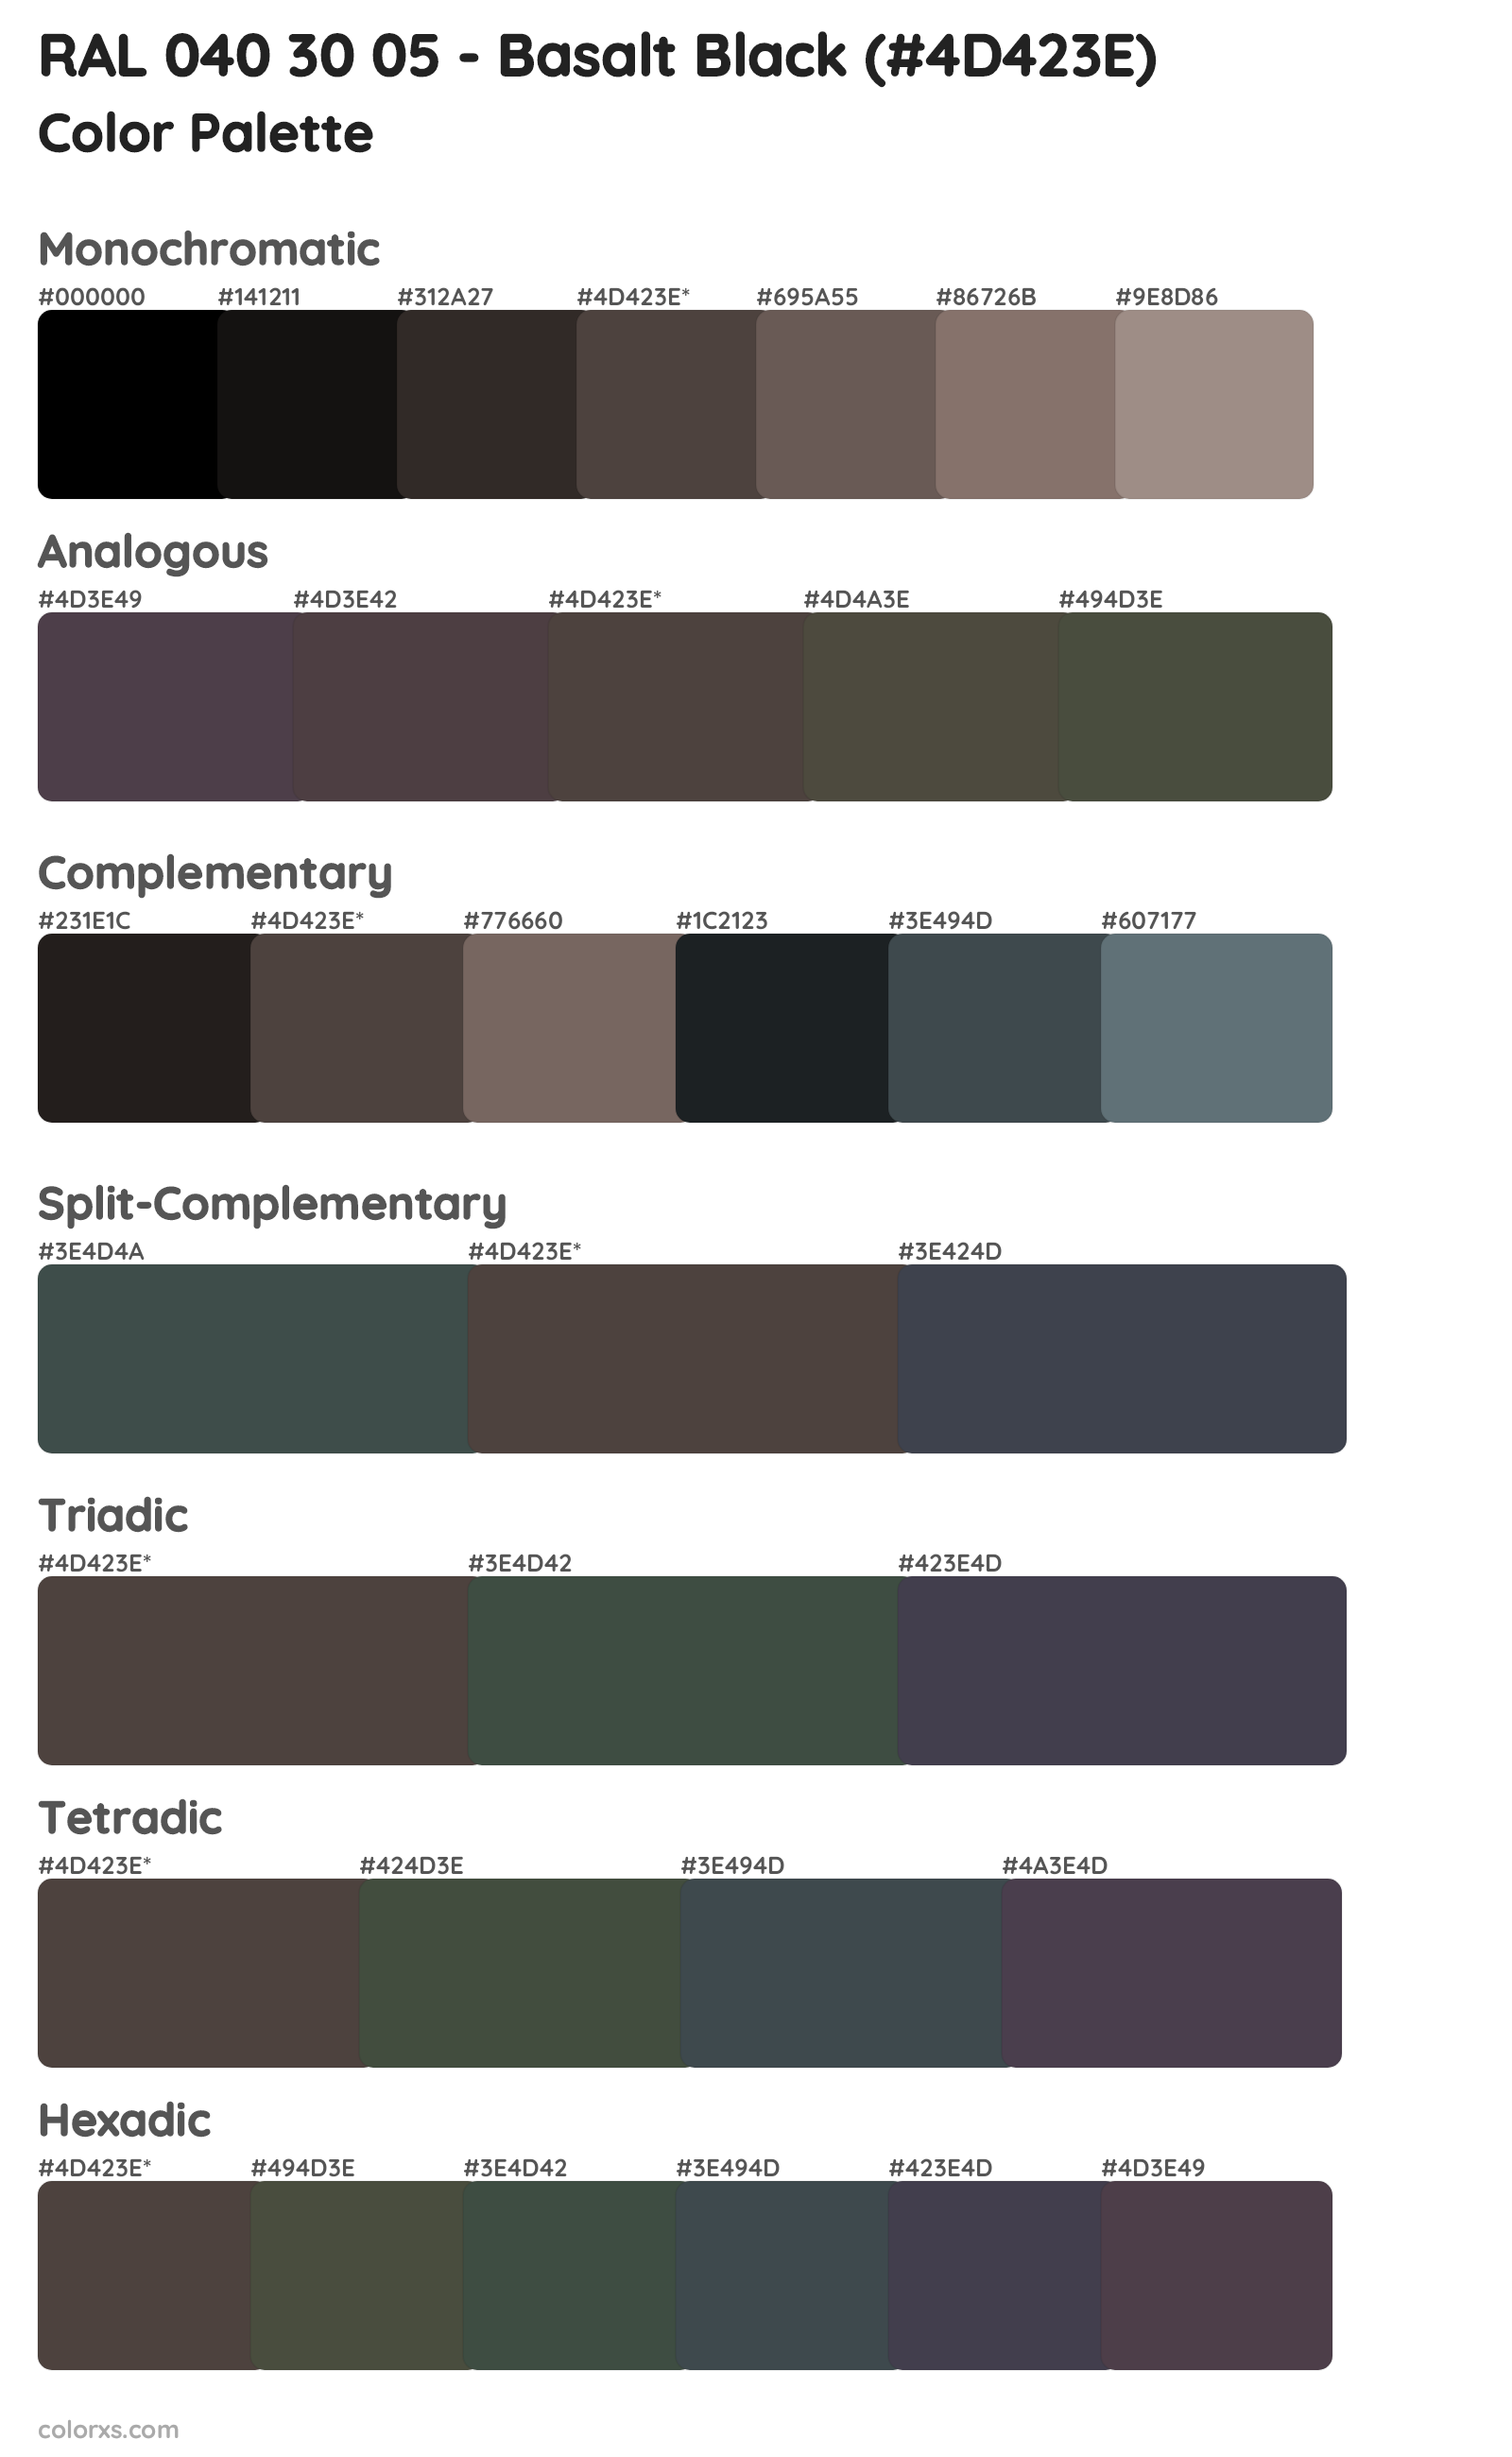 RAL 040 30 05 - Basalt Black Color Scheme Palettes